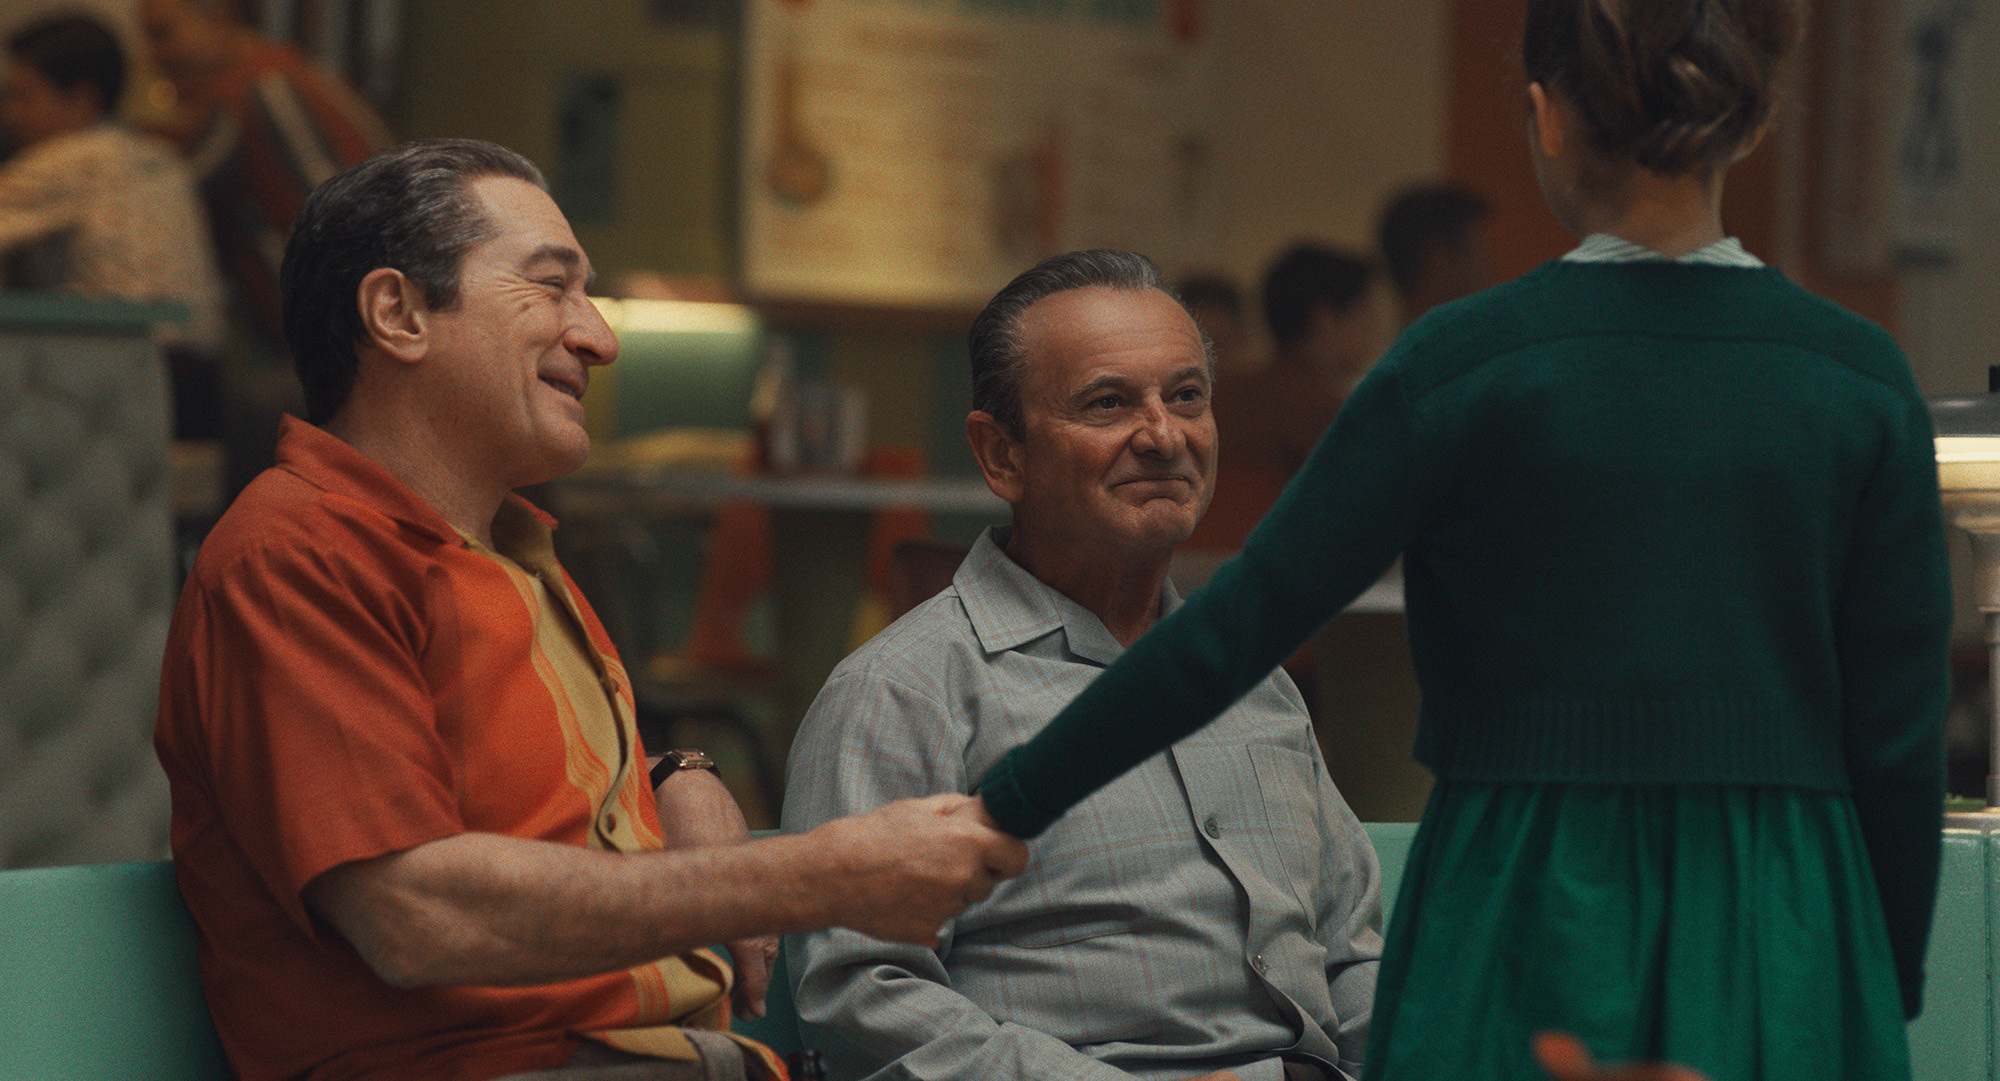 روبرت دي نيرو في دور فرانك شيران وآل باتشينو في دور جيمي هوفا في فيلم The Irishman على Netflix